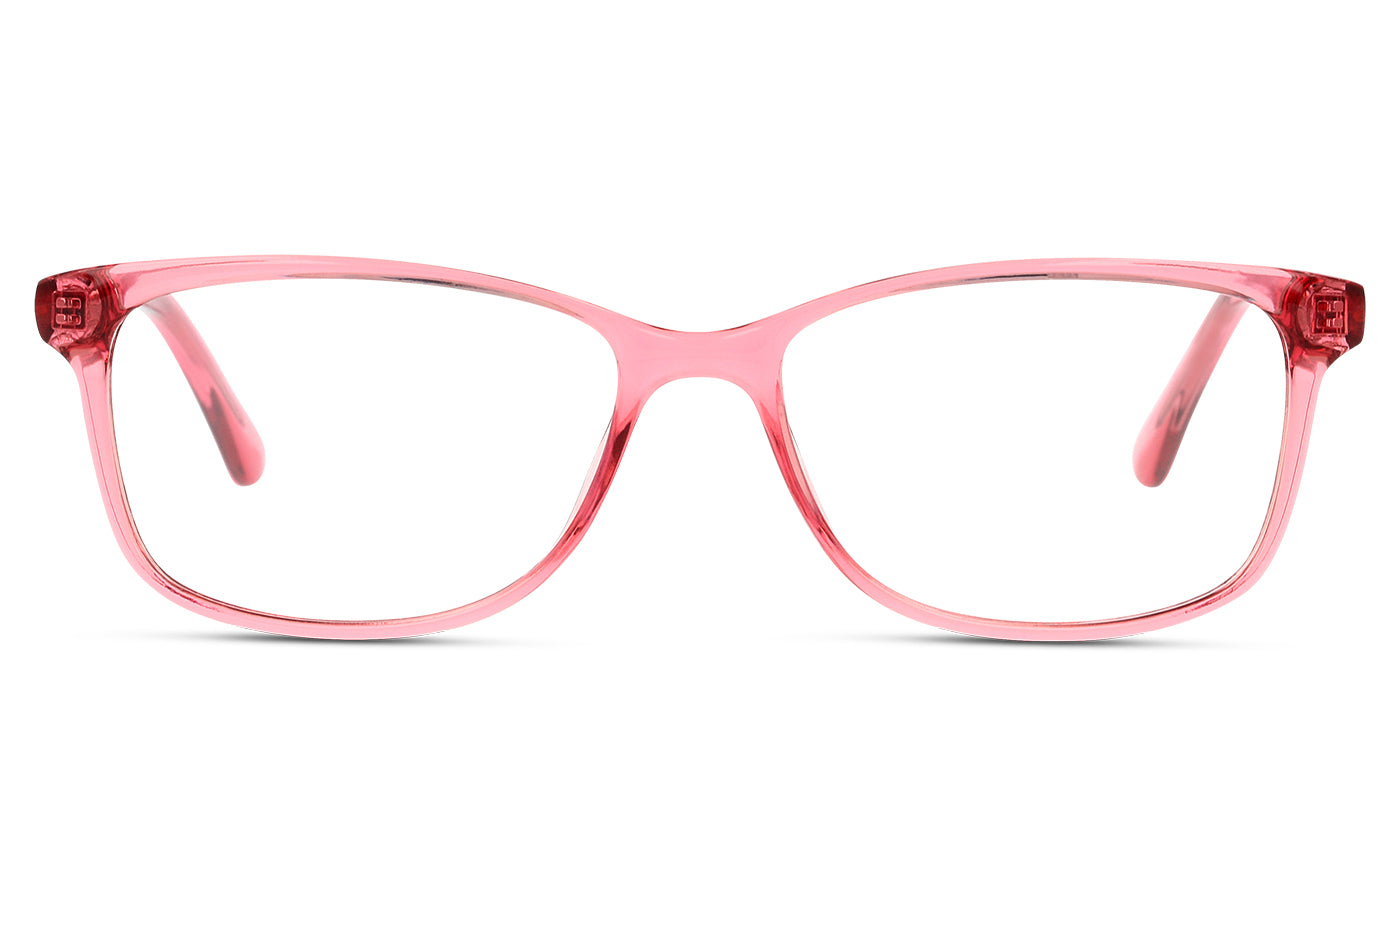 Vista-1 - Gafas oftálmicas Seen BP_SNIF10 Mujer Color Rosado / Incluye lentes filtro luz azul violeta